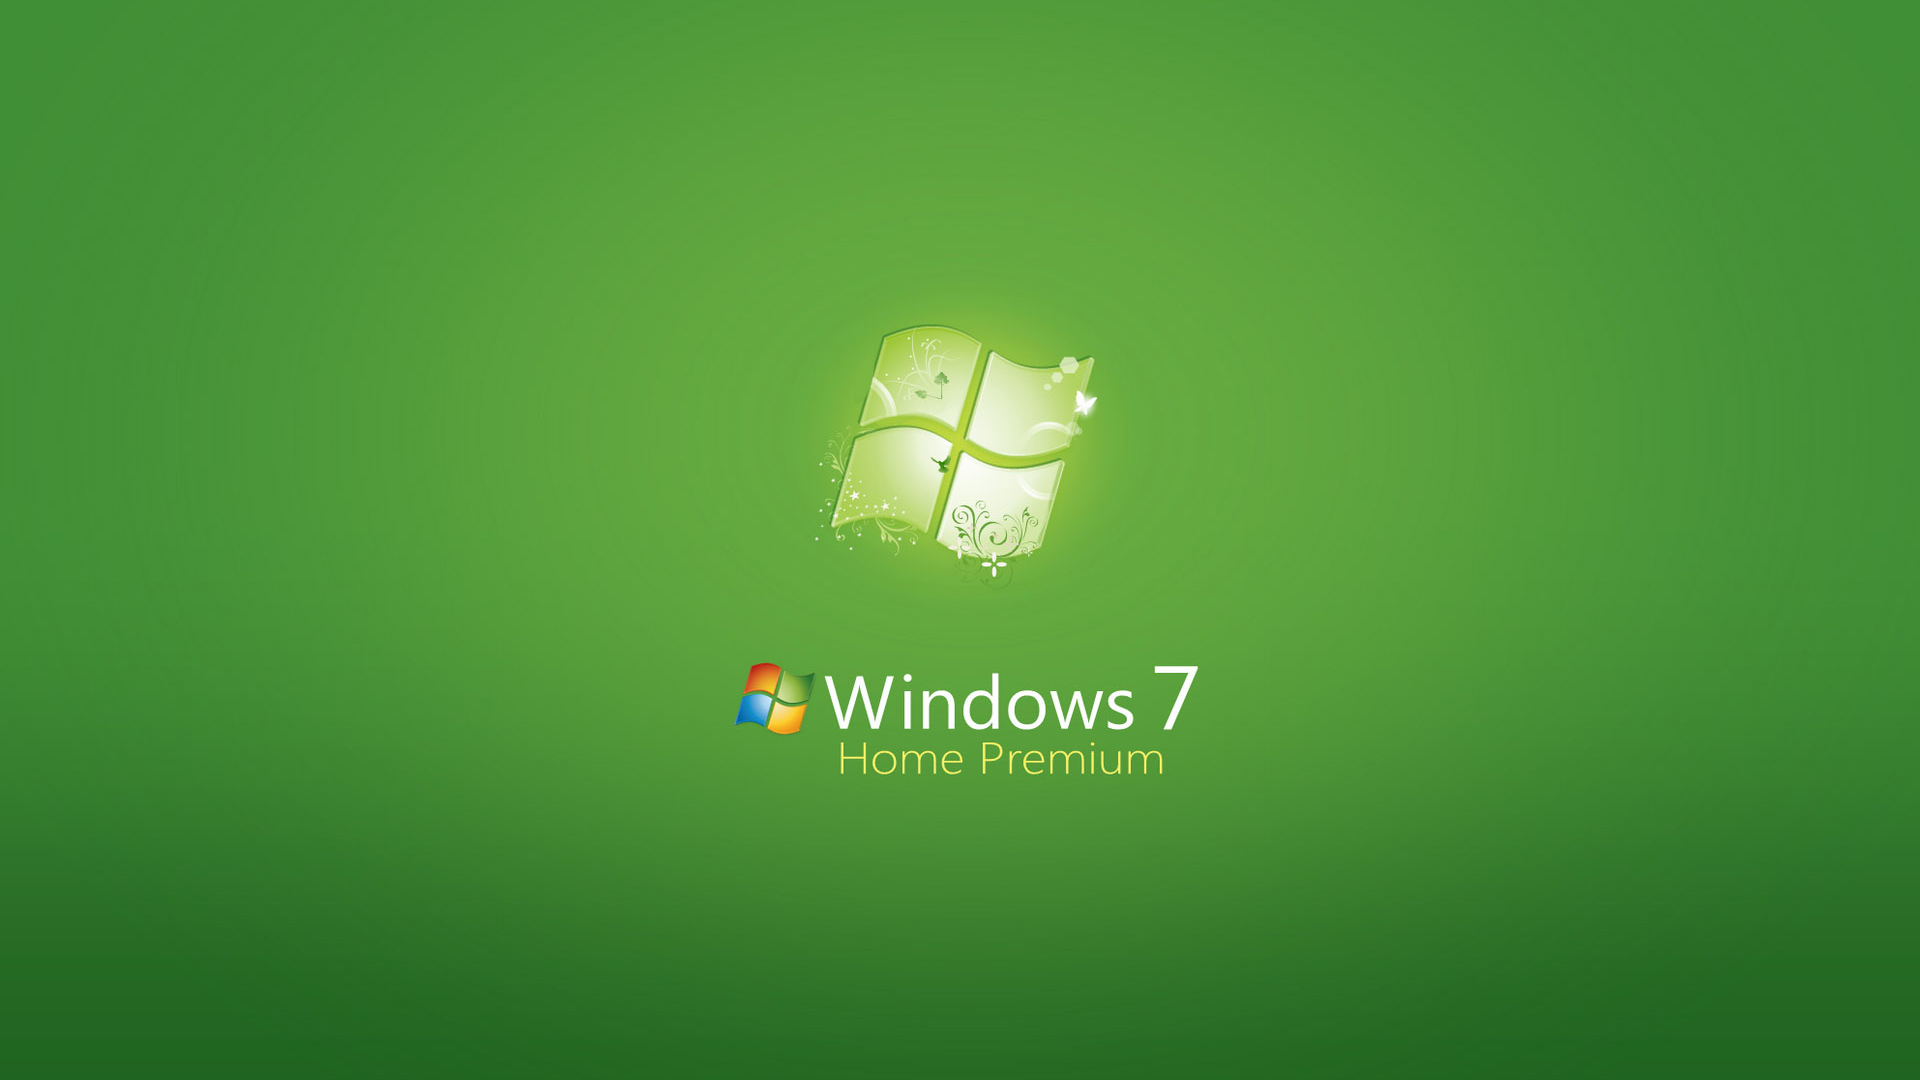 Papel De Parede Windows 7 Hd Oi depende se seu windows 7 for starter ...